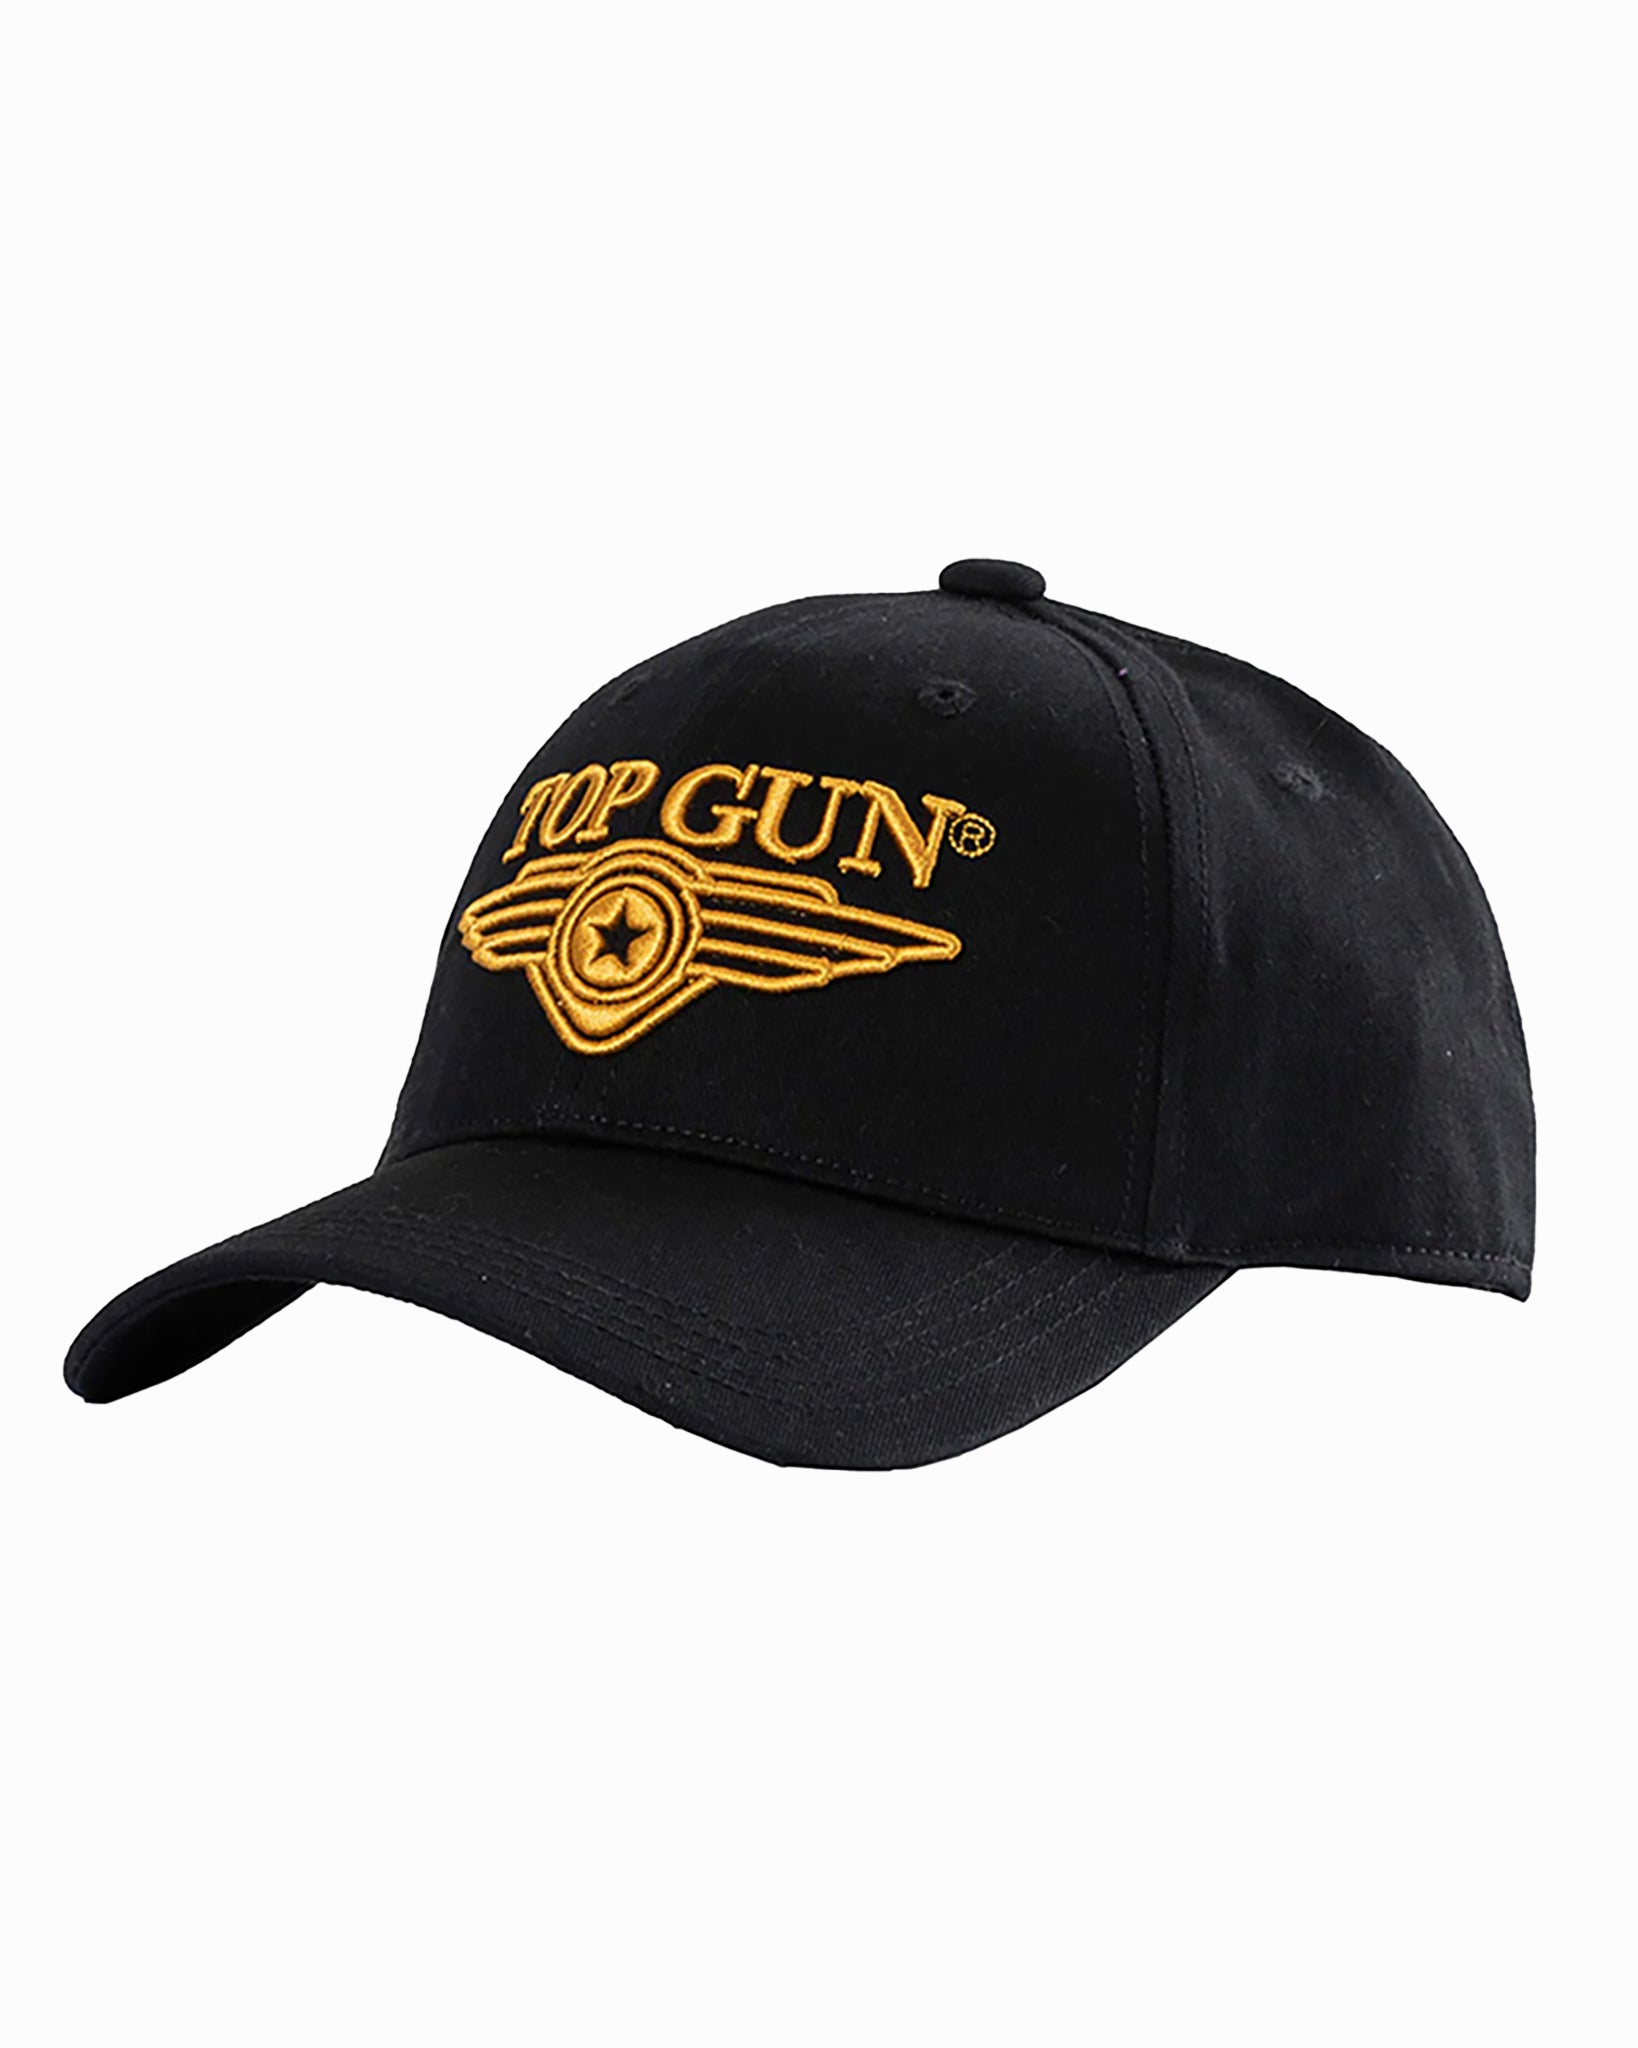 LOGO TOP CAP GUN® 3D Top Store – Gun